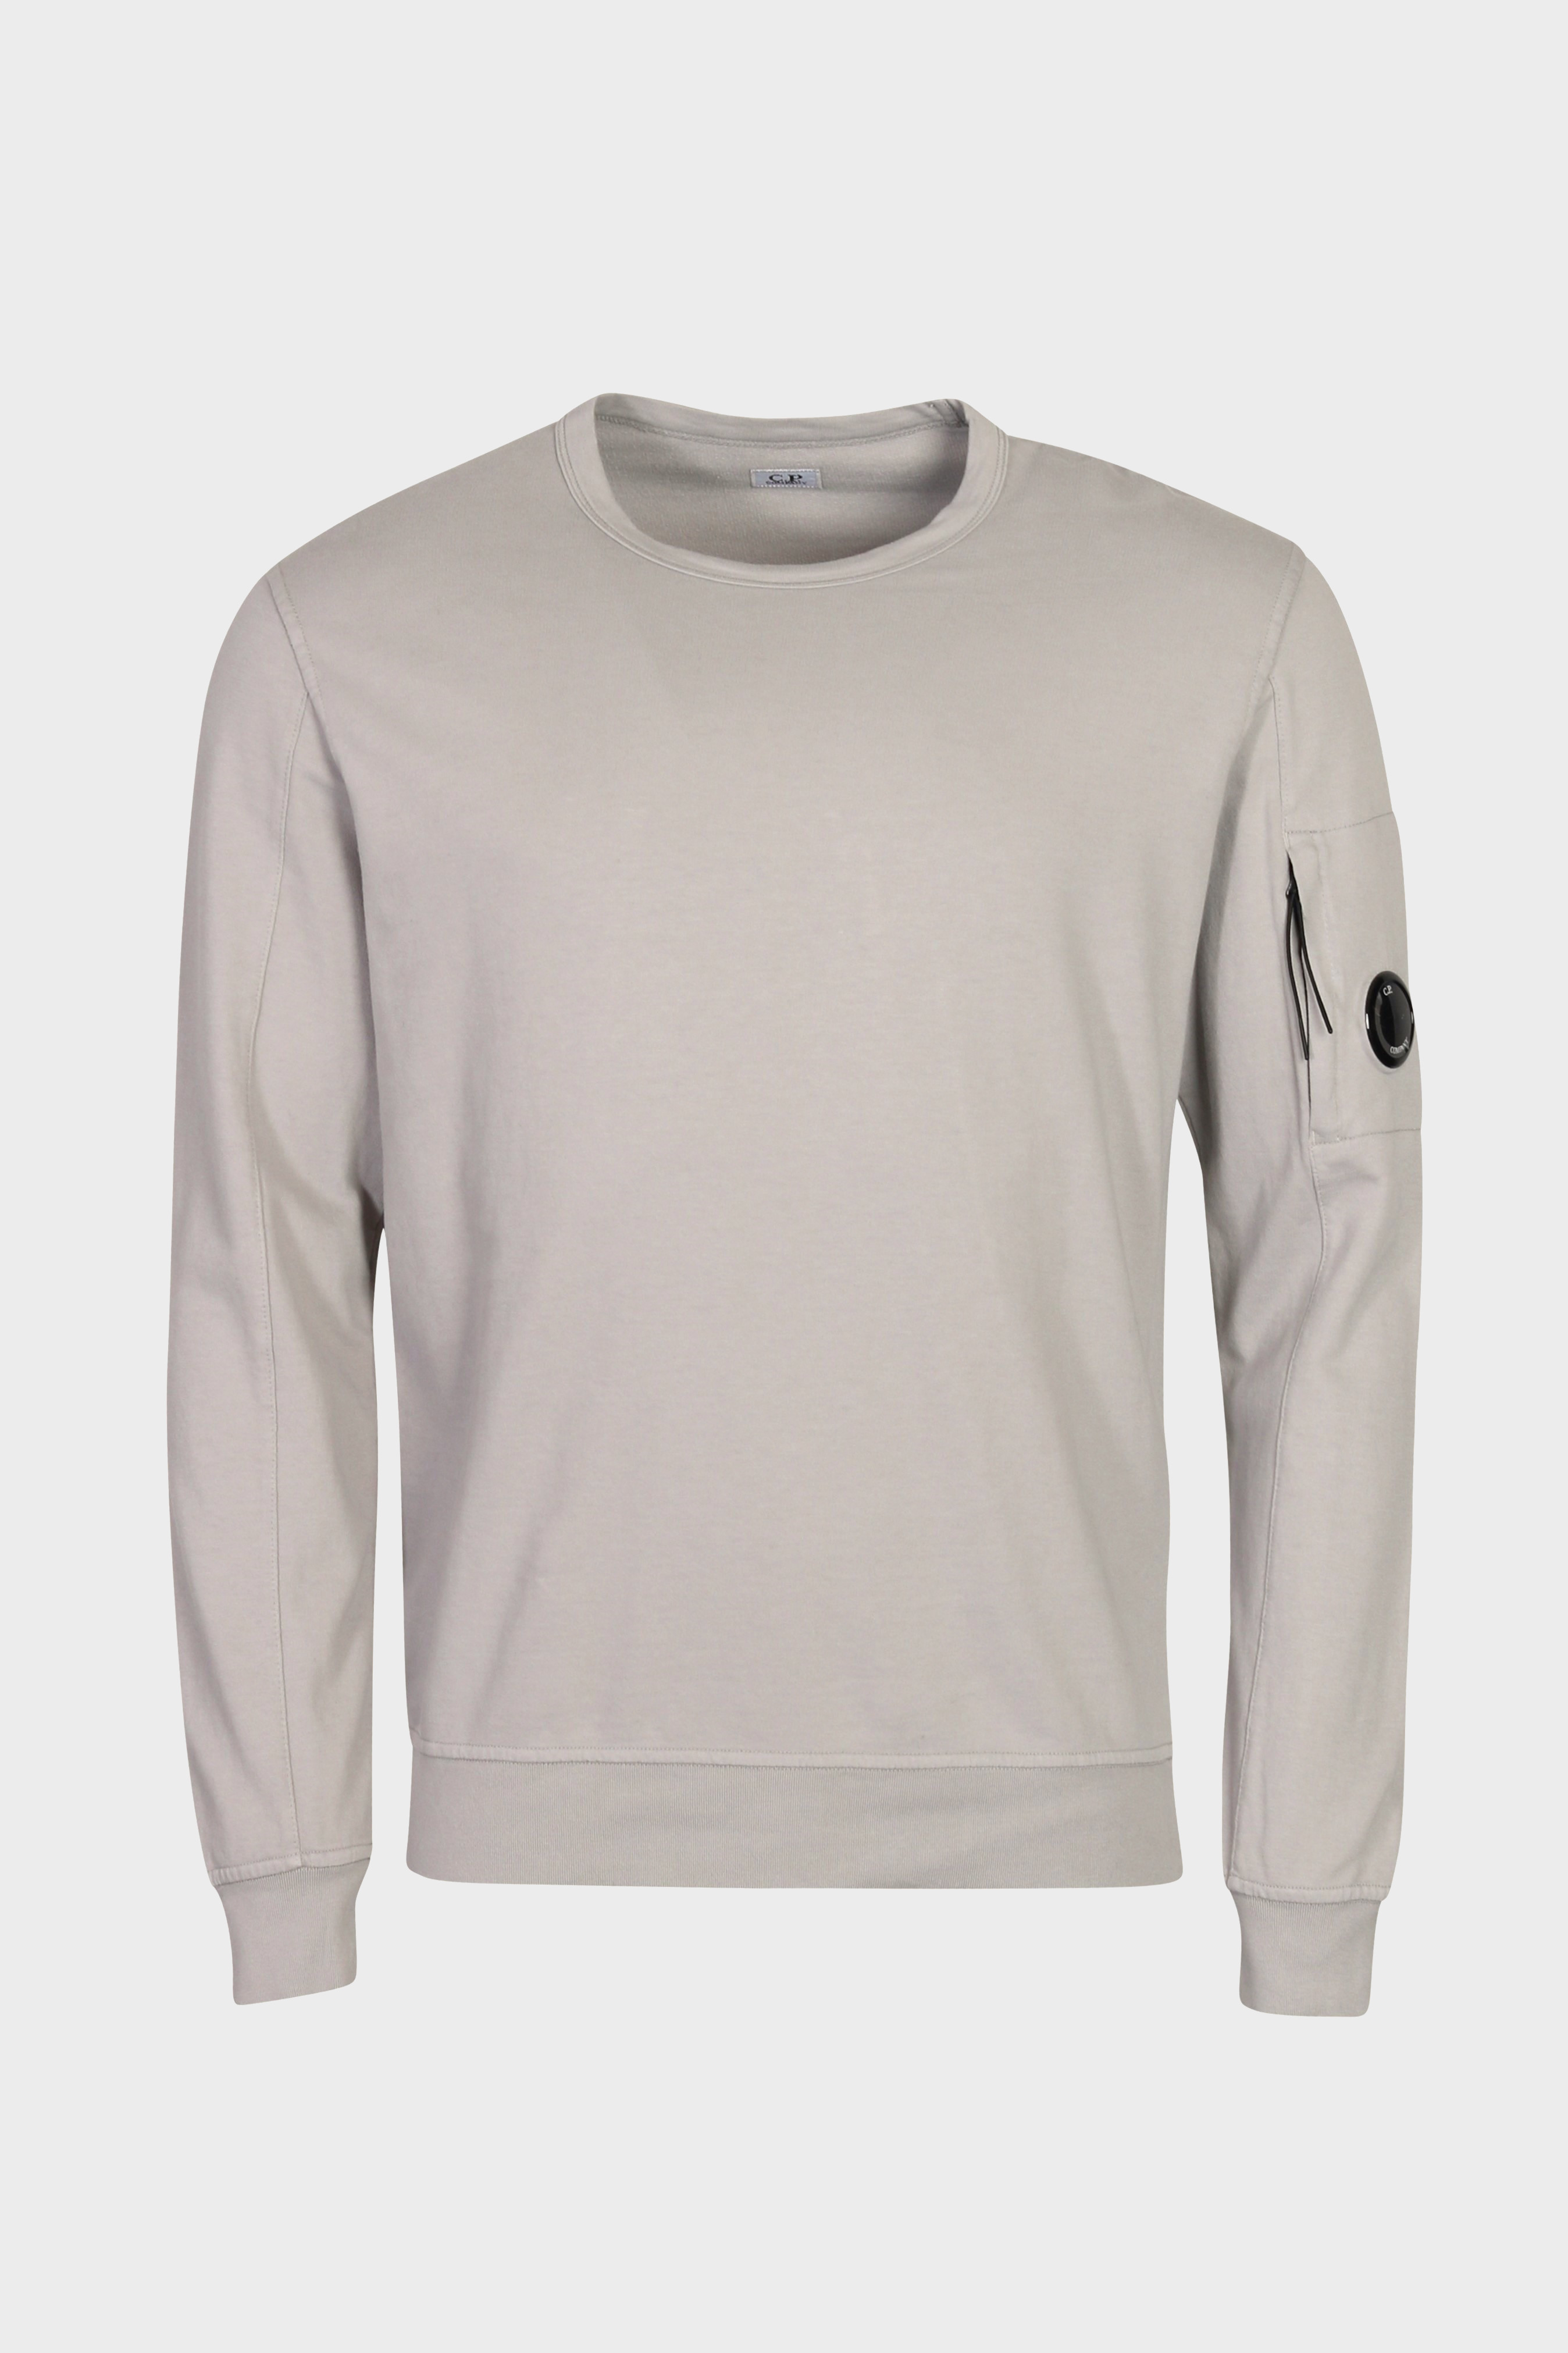 C.P. COMPANY Light Fleece Sweatshirt in Drizzle Grey L